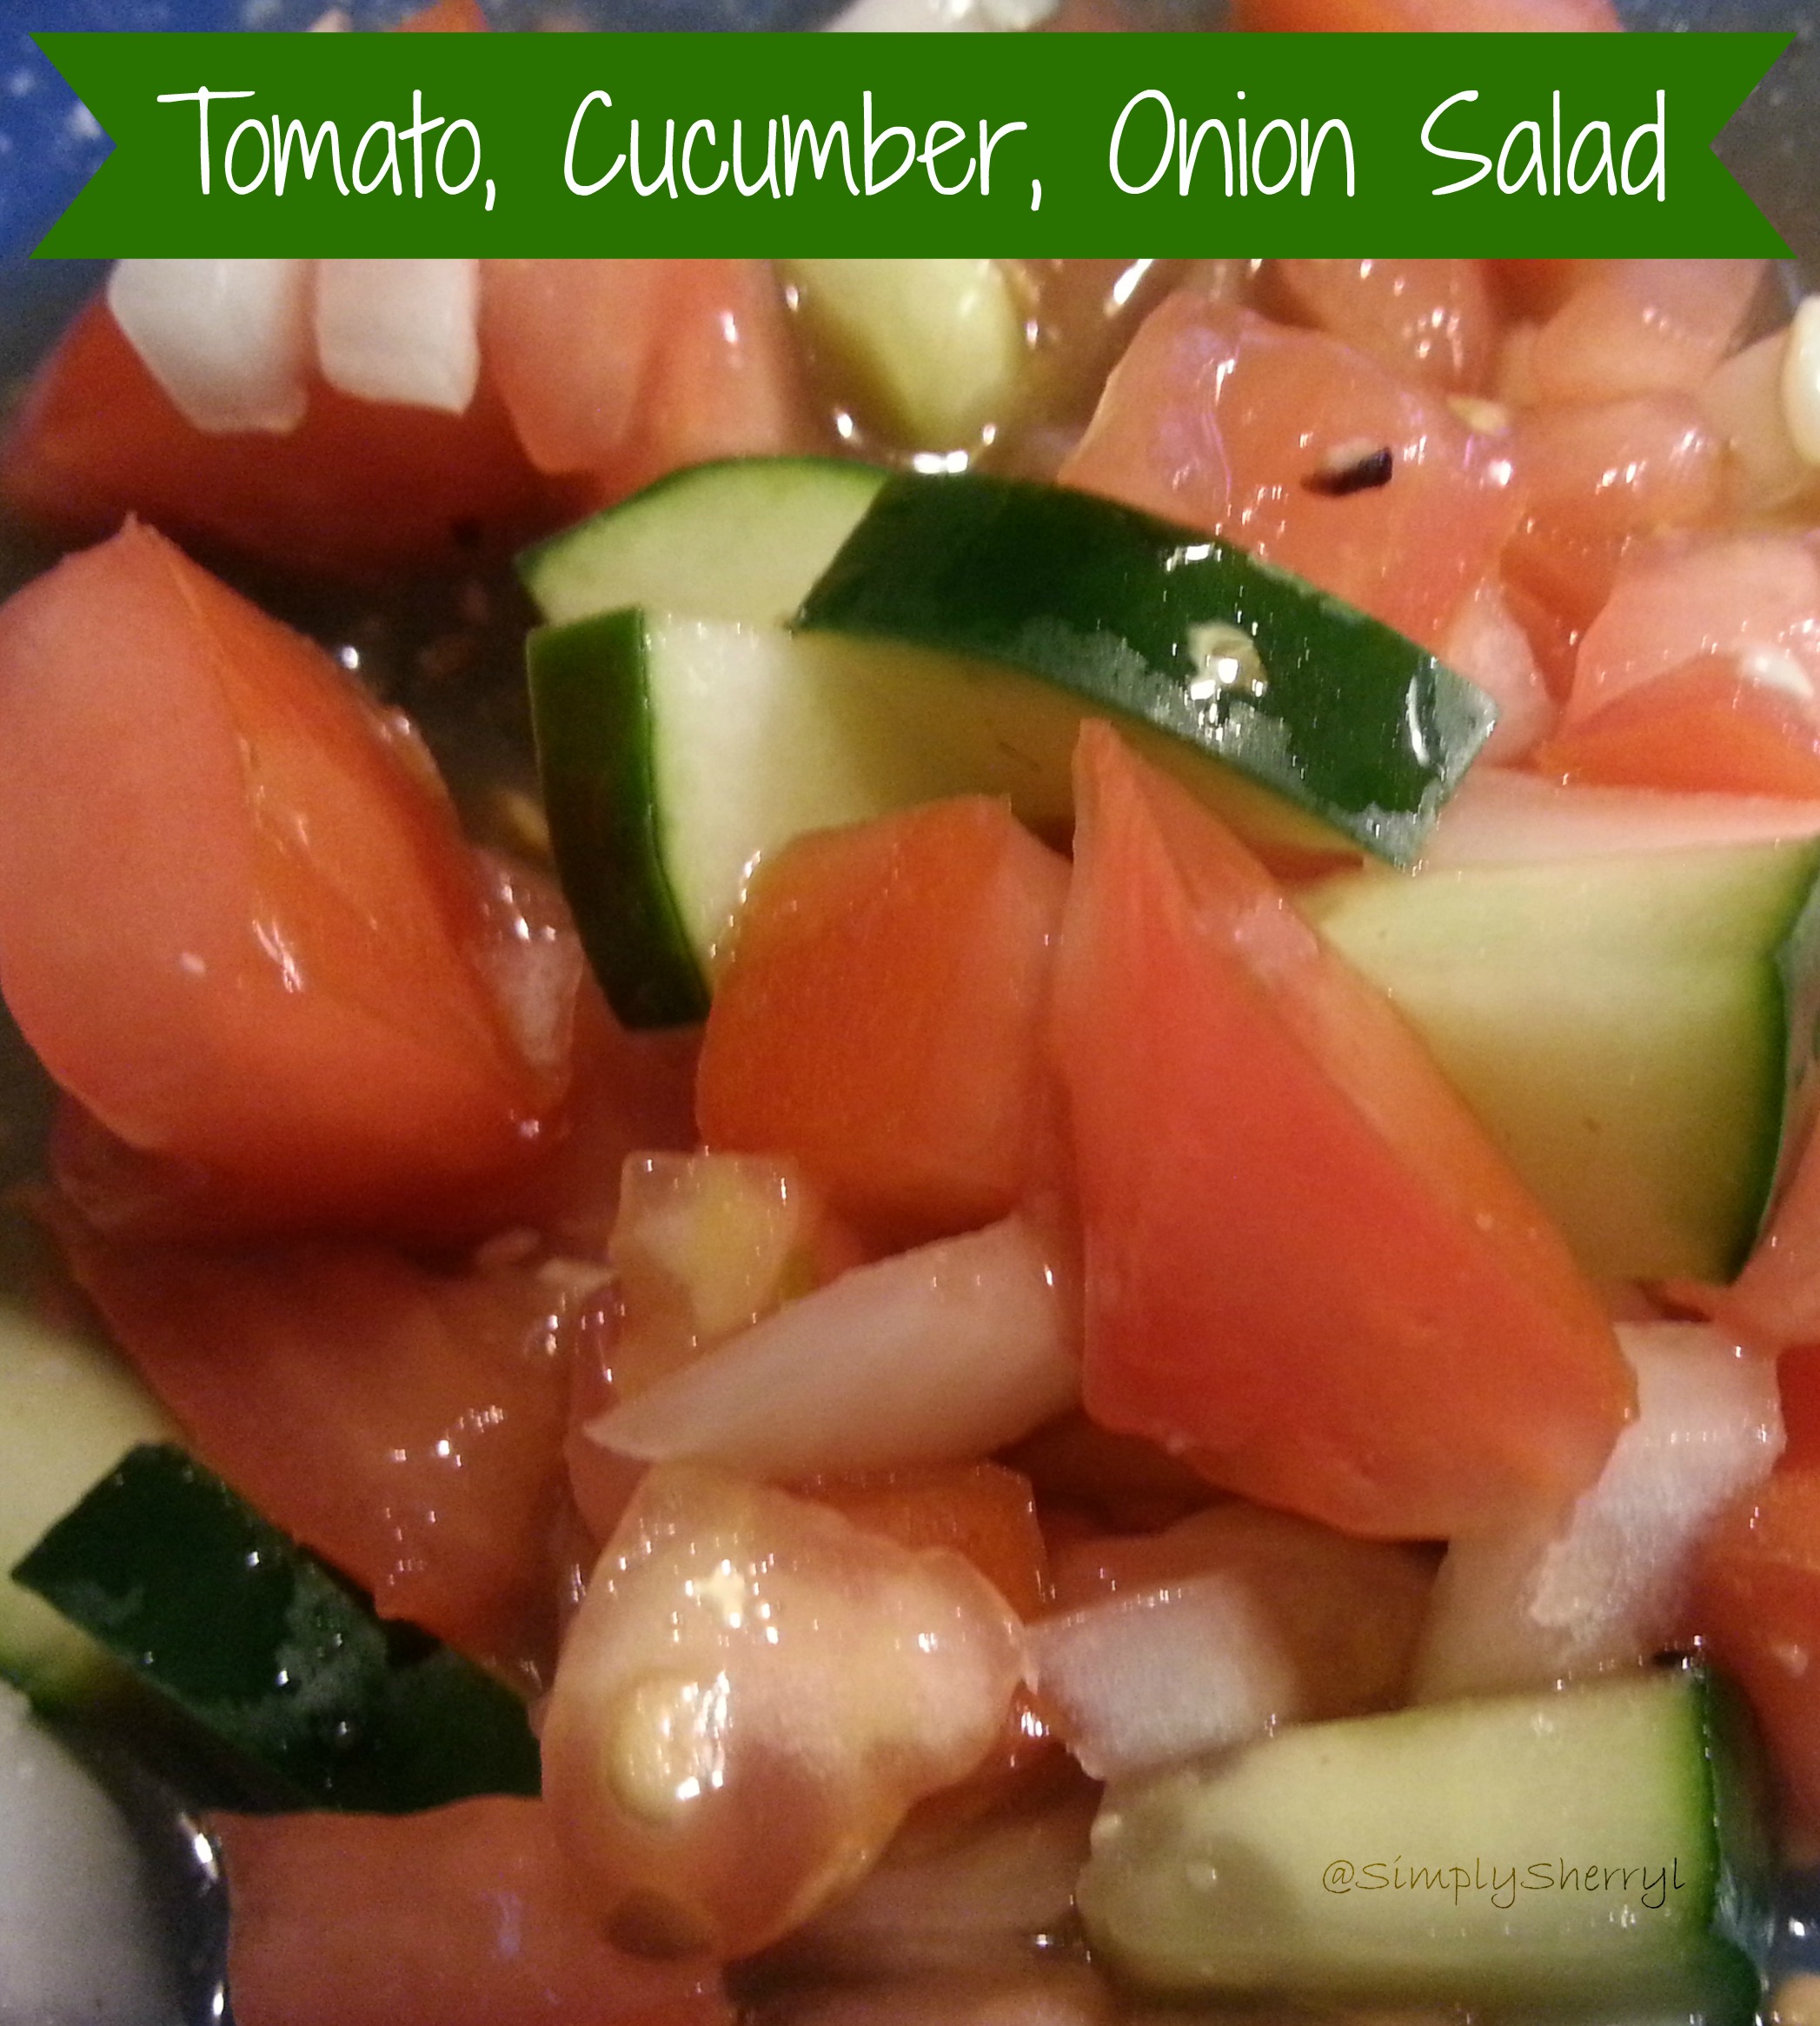 Tomato, Cucumber, Onion Salad